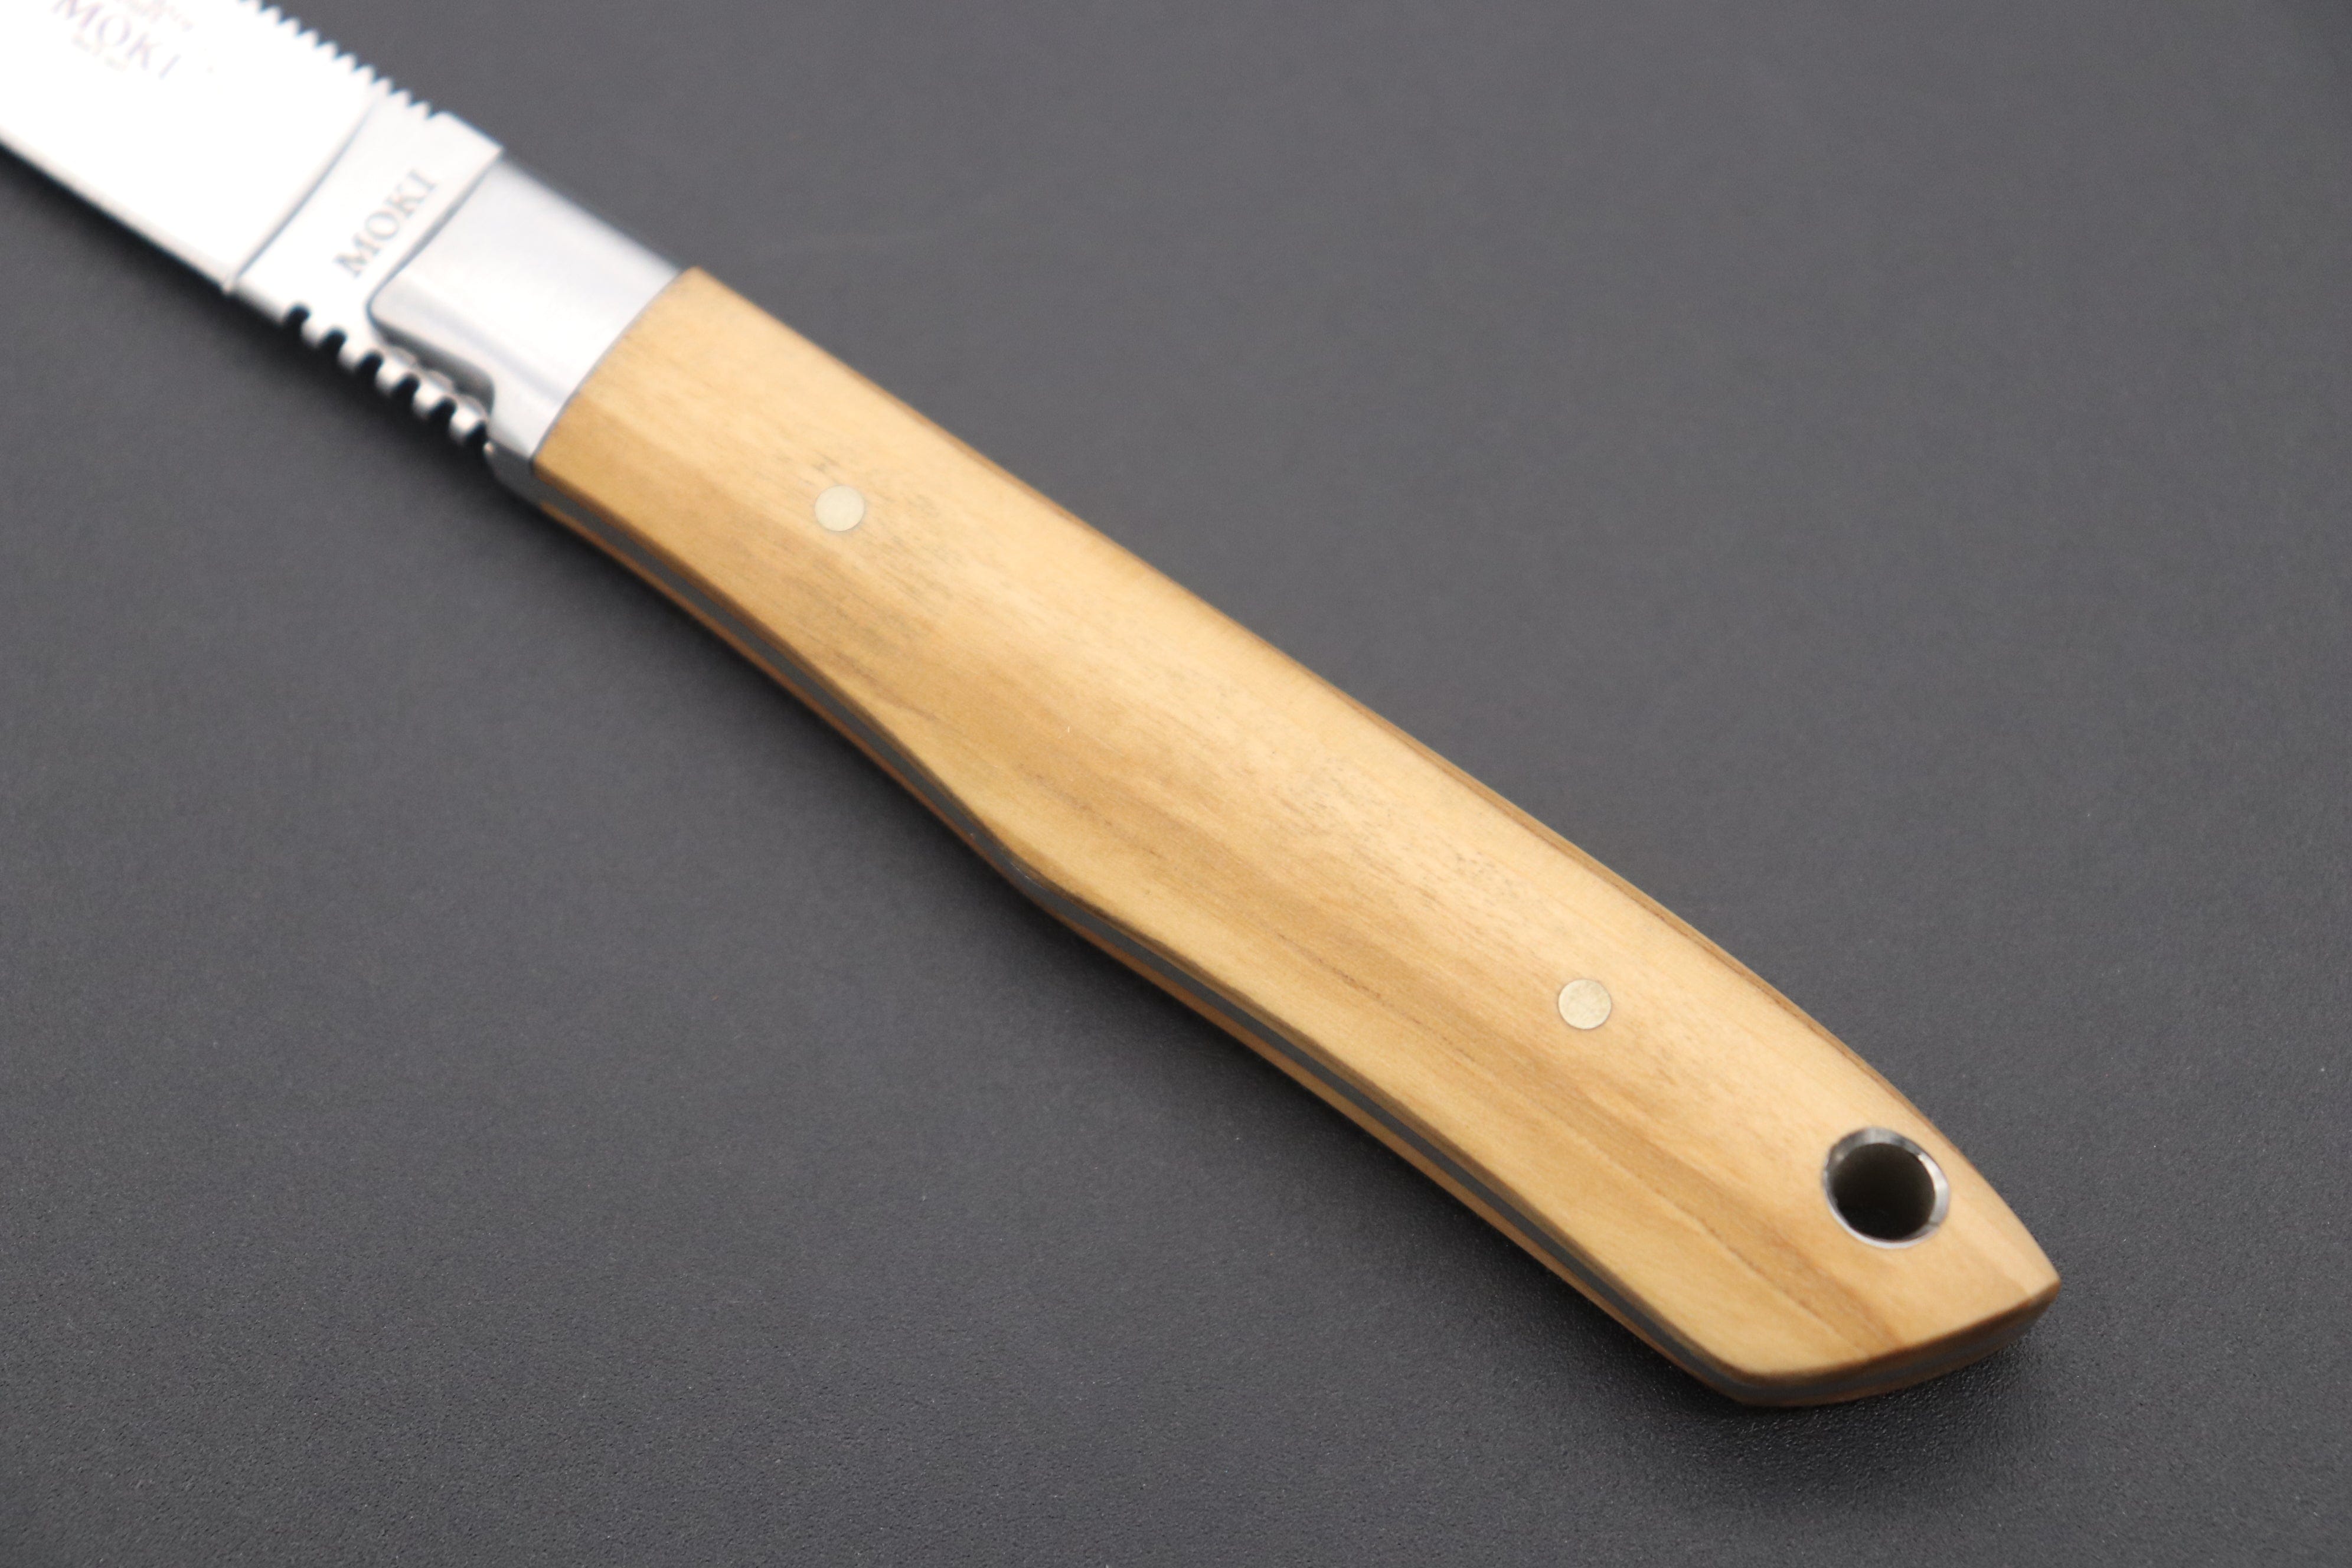 Opinel No. 8 Folding Knife with Sheath - Olive Wood Handle